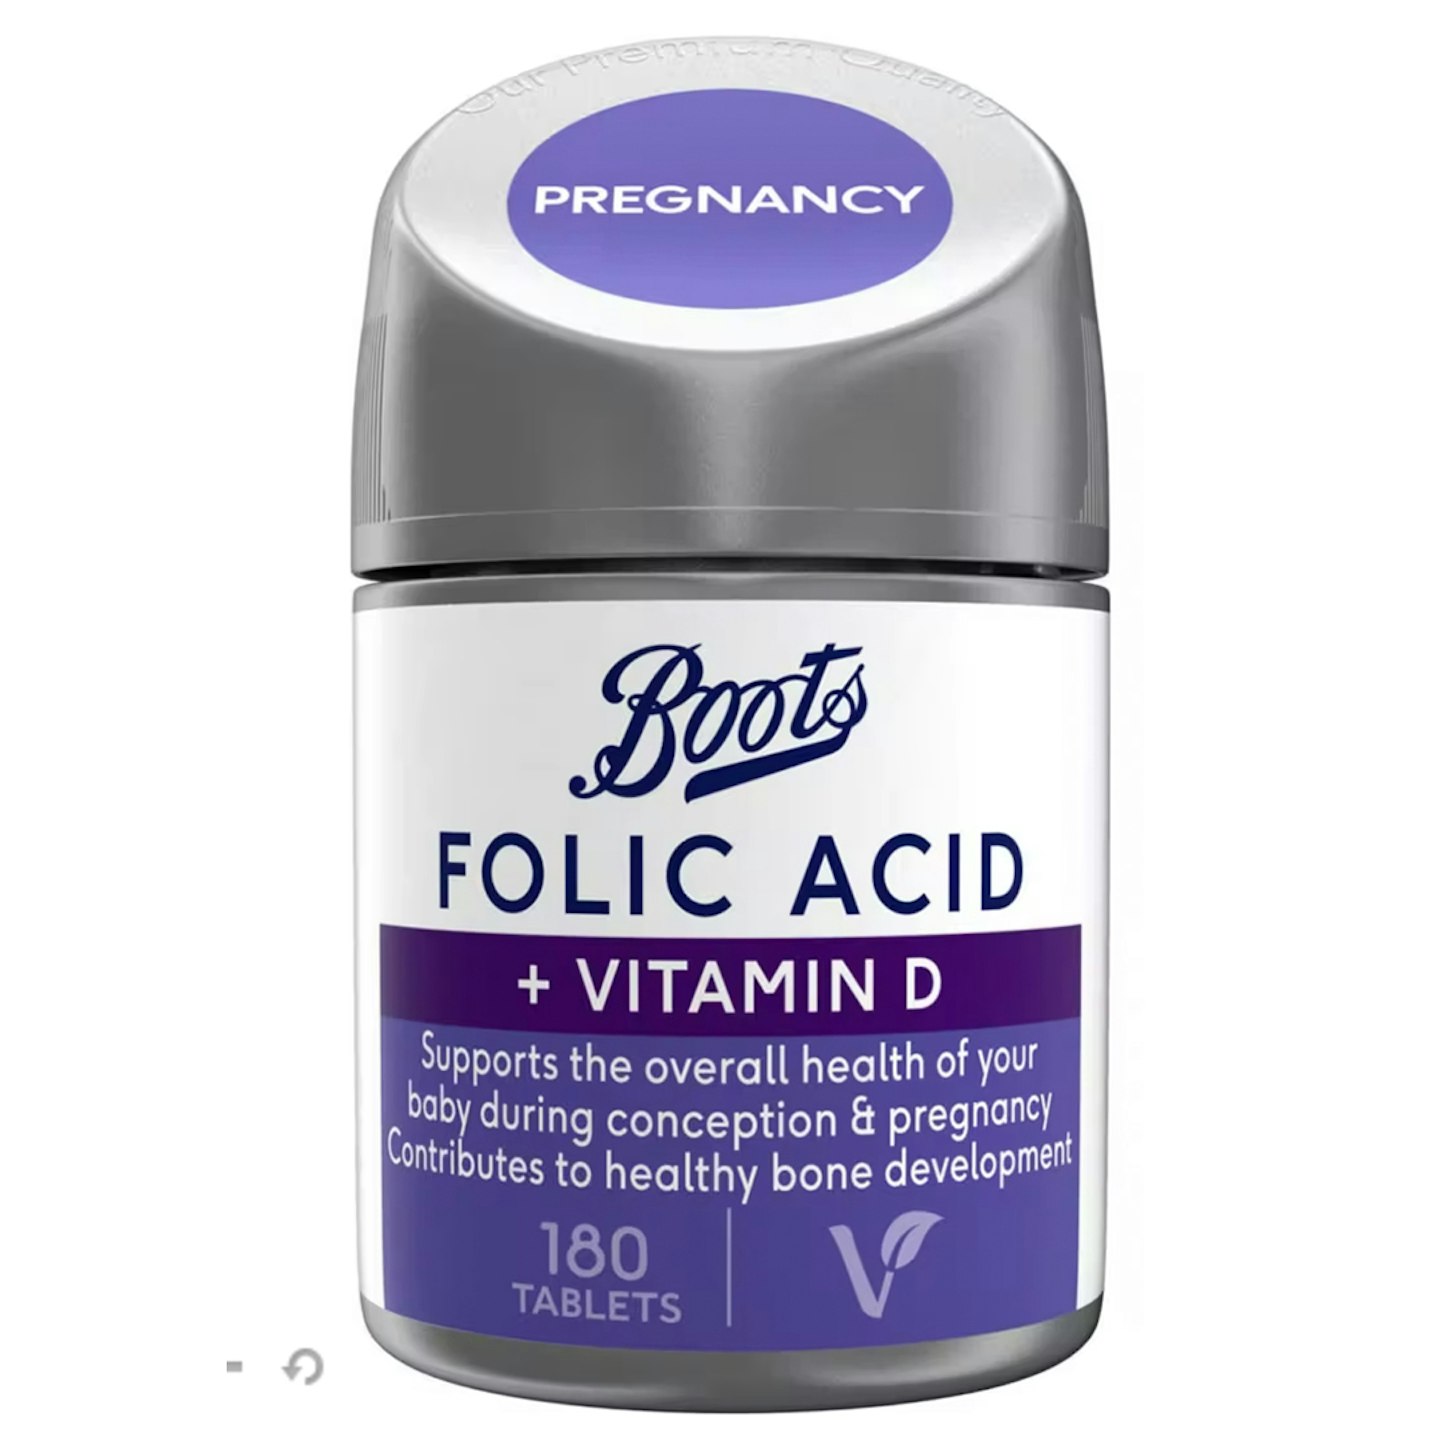  offer Boots Folic Acid + Vitamin D Tablets